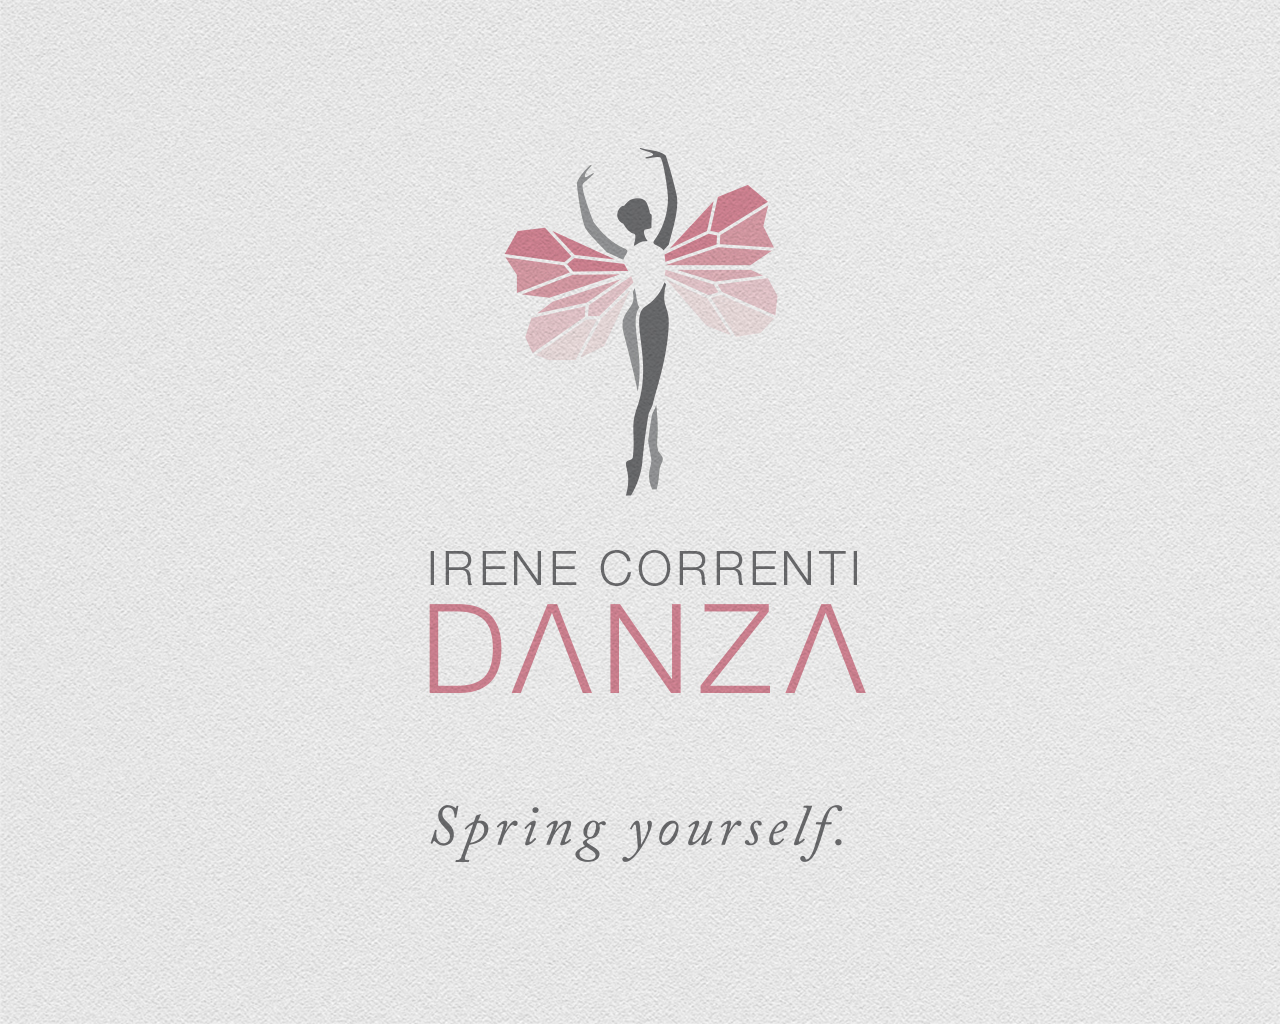 Logo Irene Correnti Danza